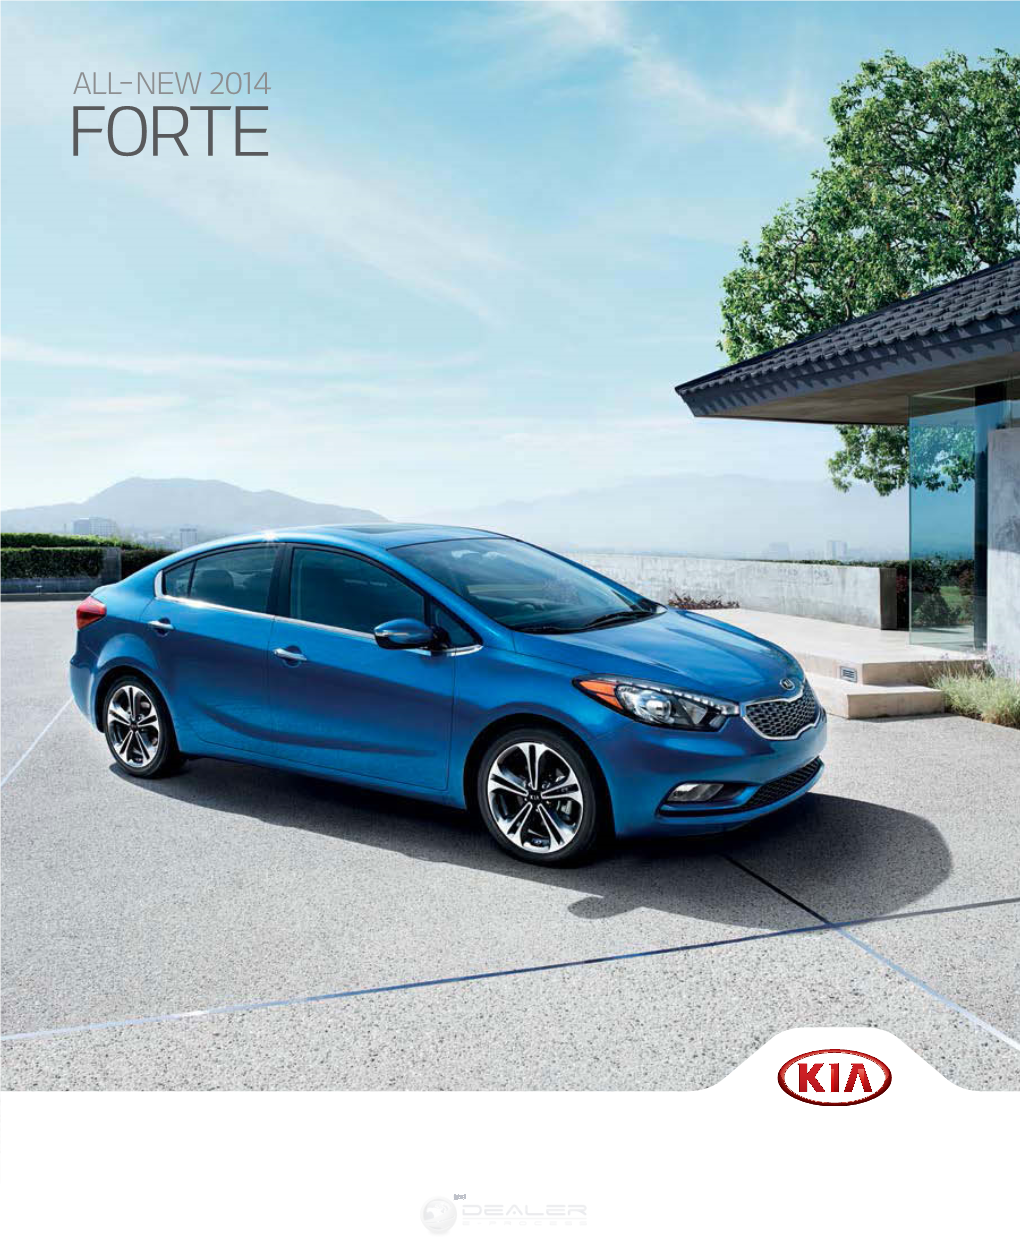 All-New 2014 Kia Forte